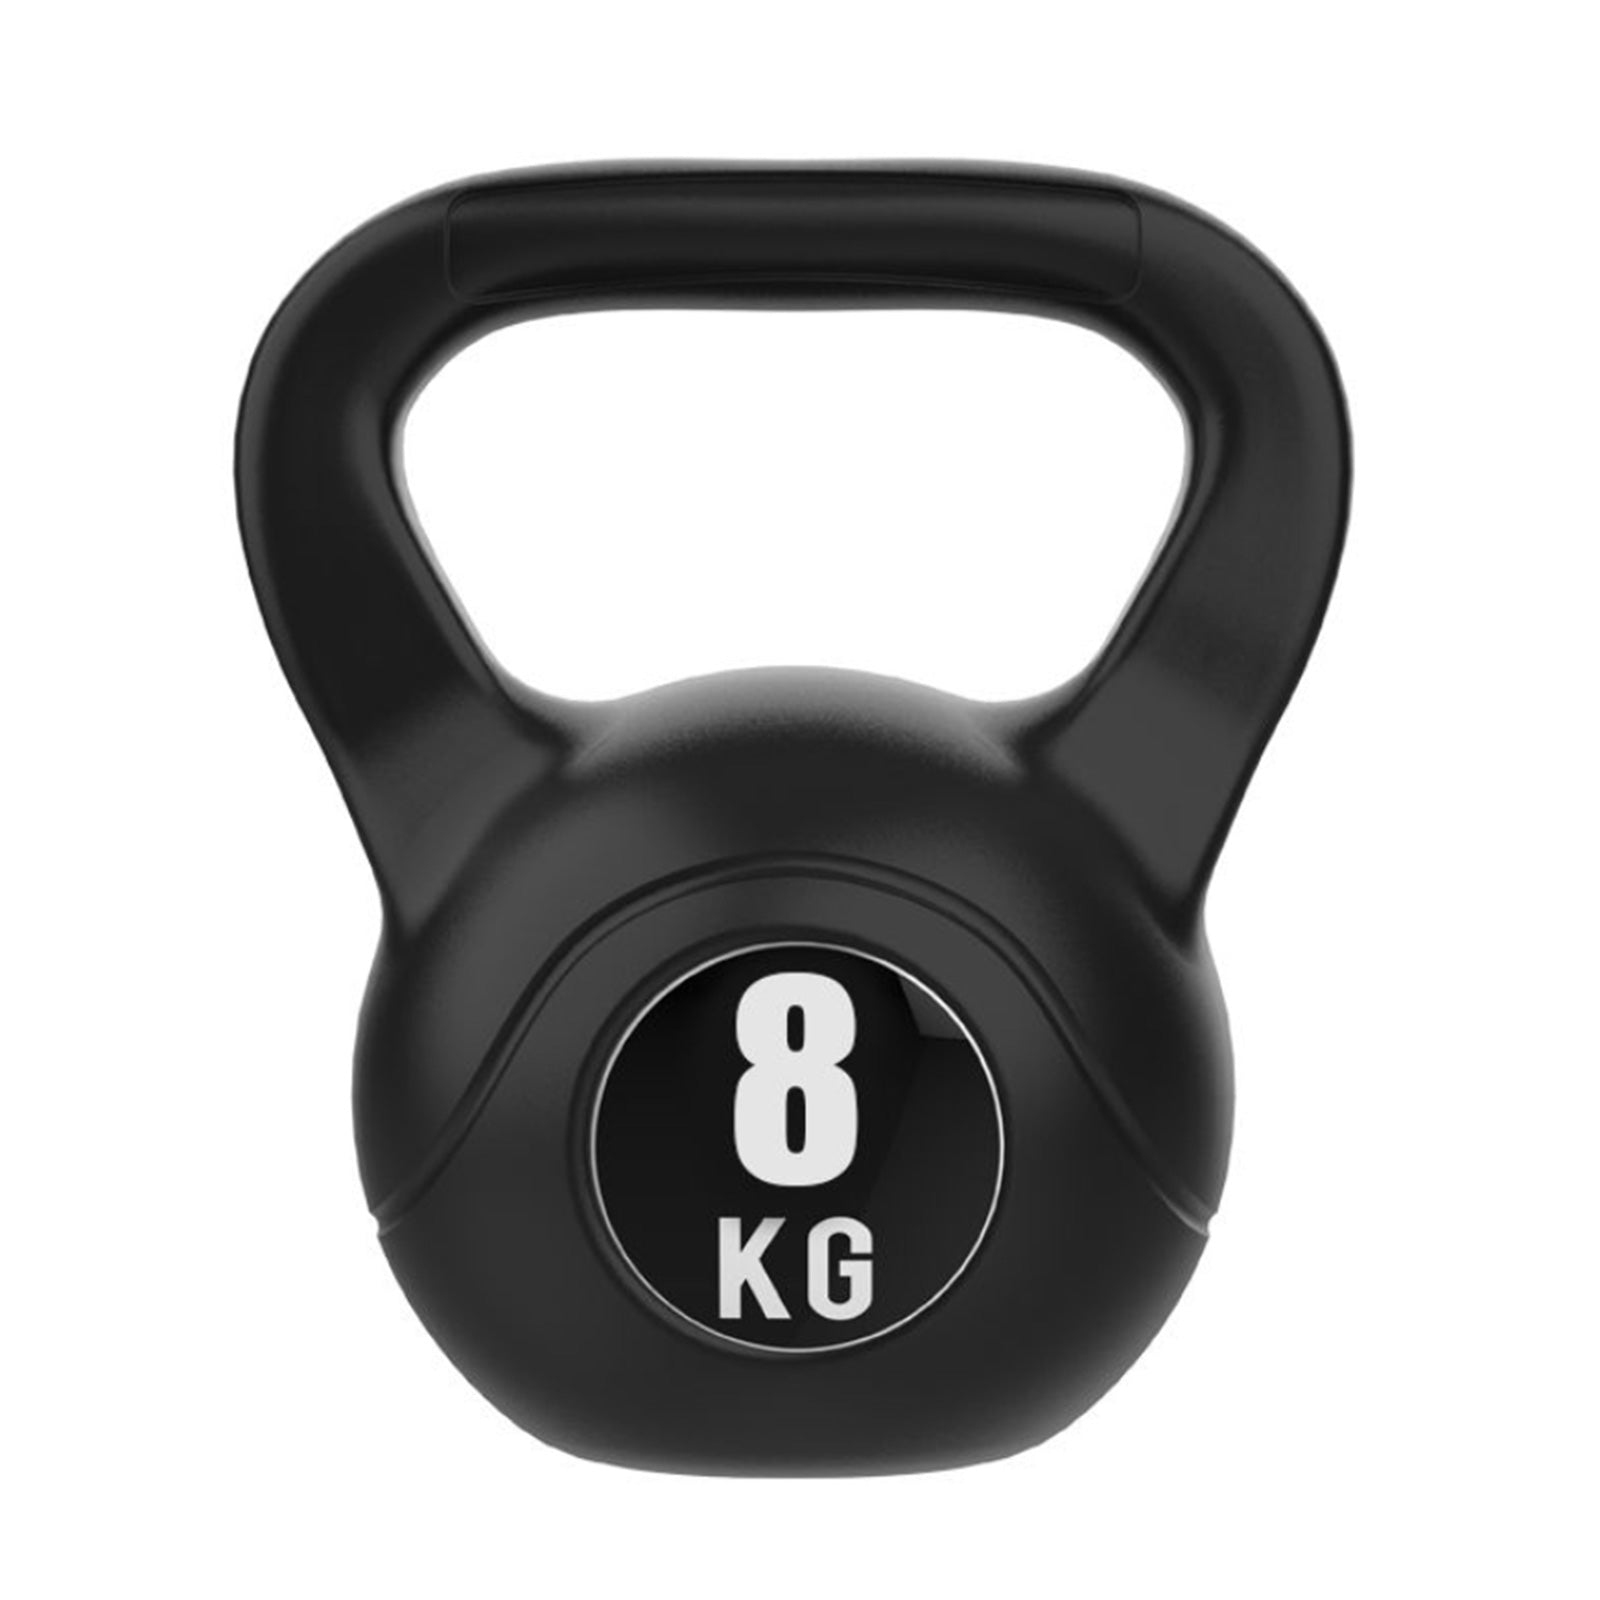 JMQ 4-12KG Kettlebell Kettle Bell Weight Exercise Home Gym Workout - 8KG